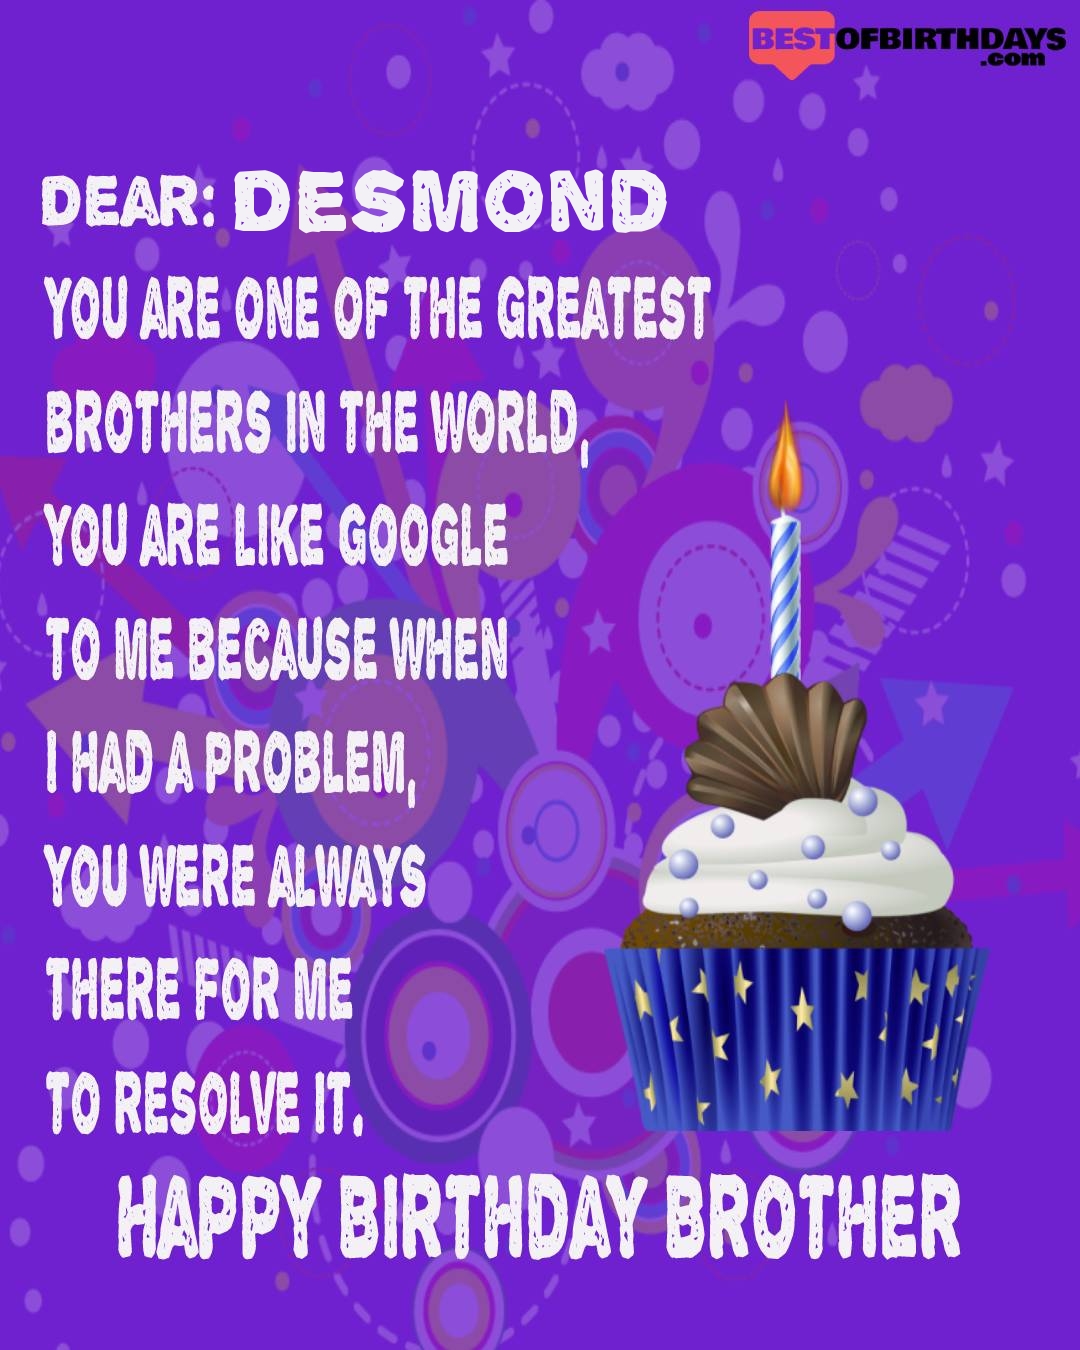 Happy birthday desmond bhai brother bro